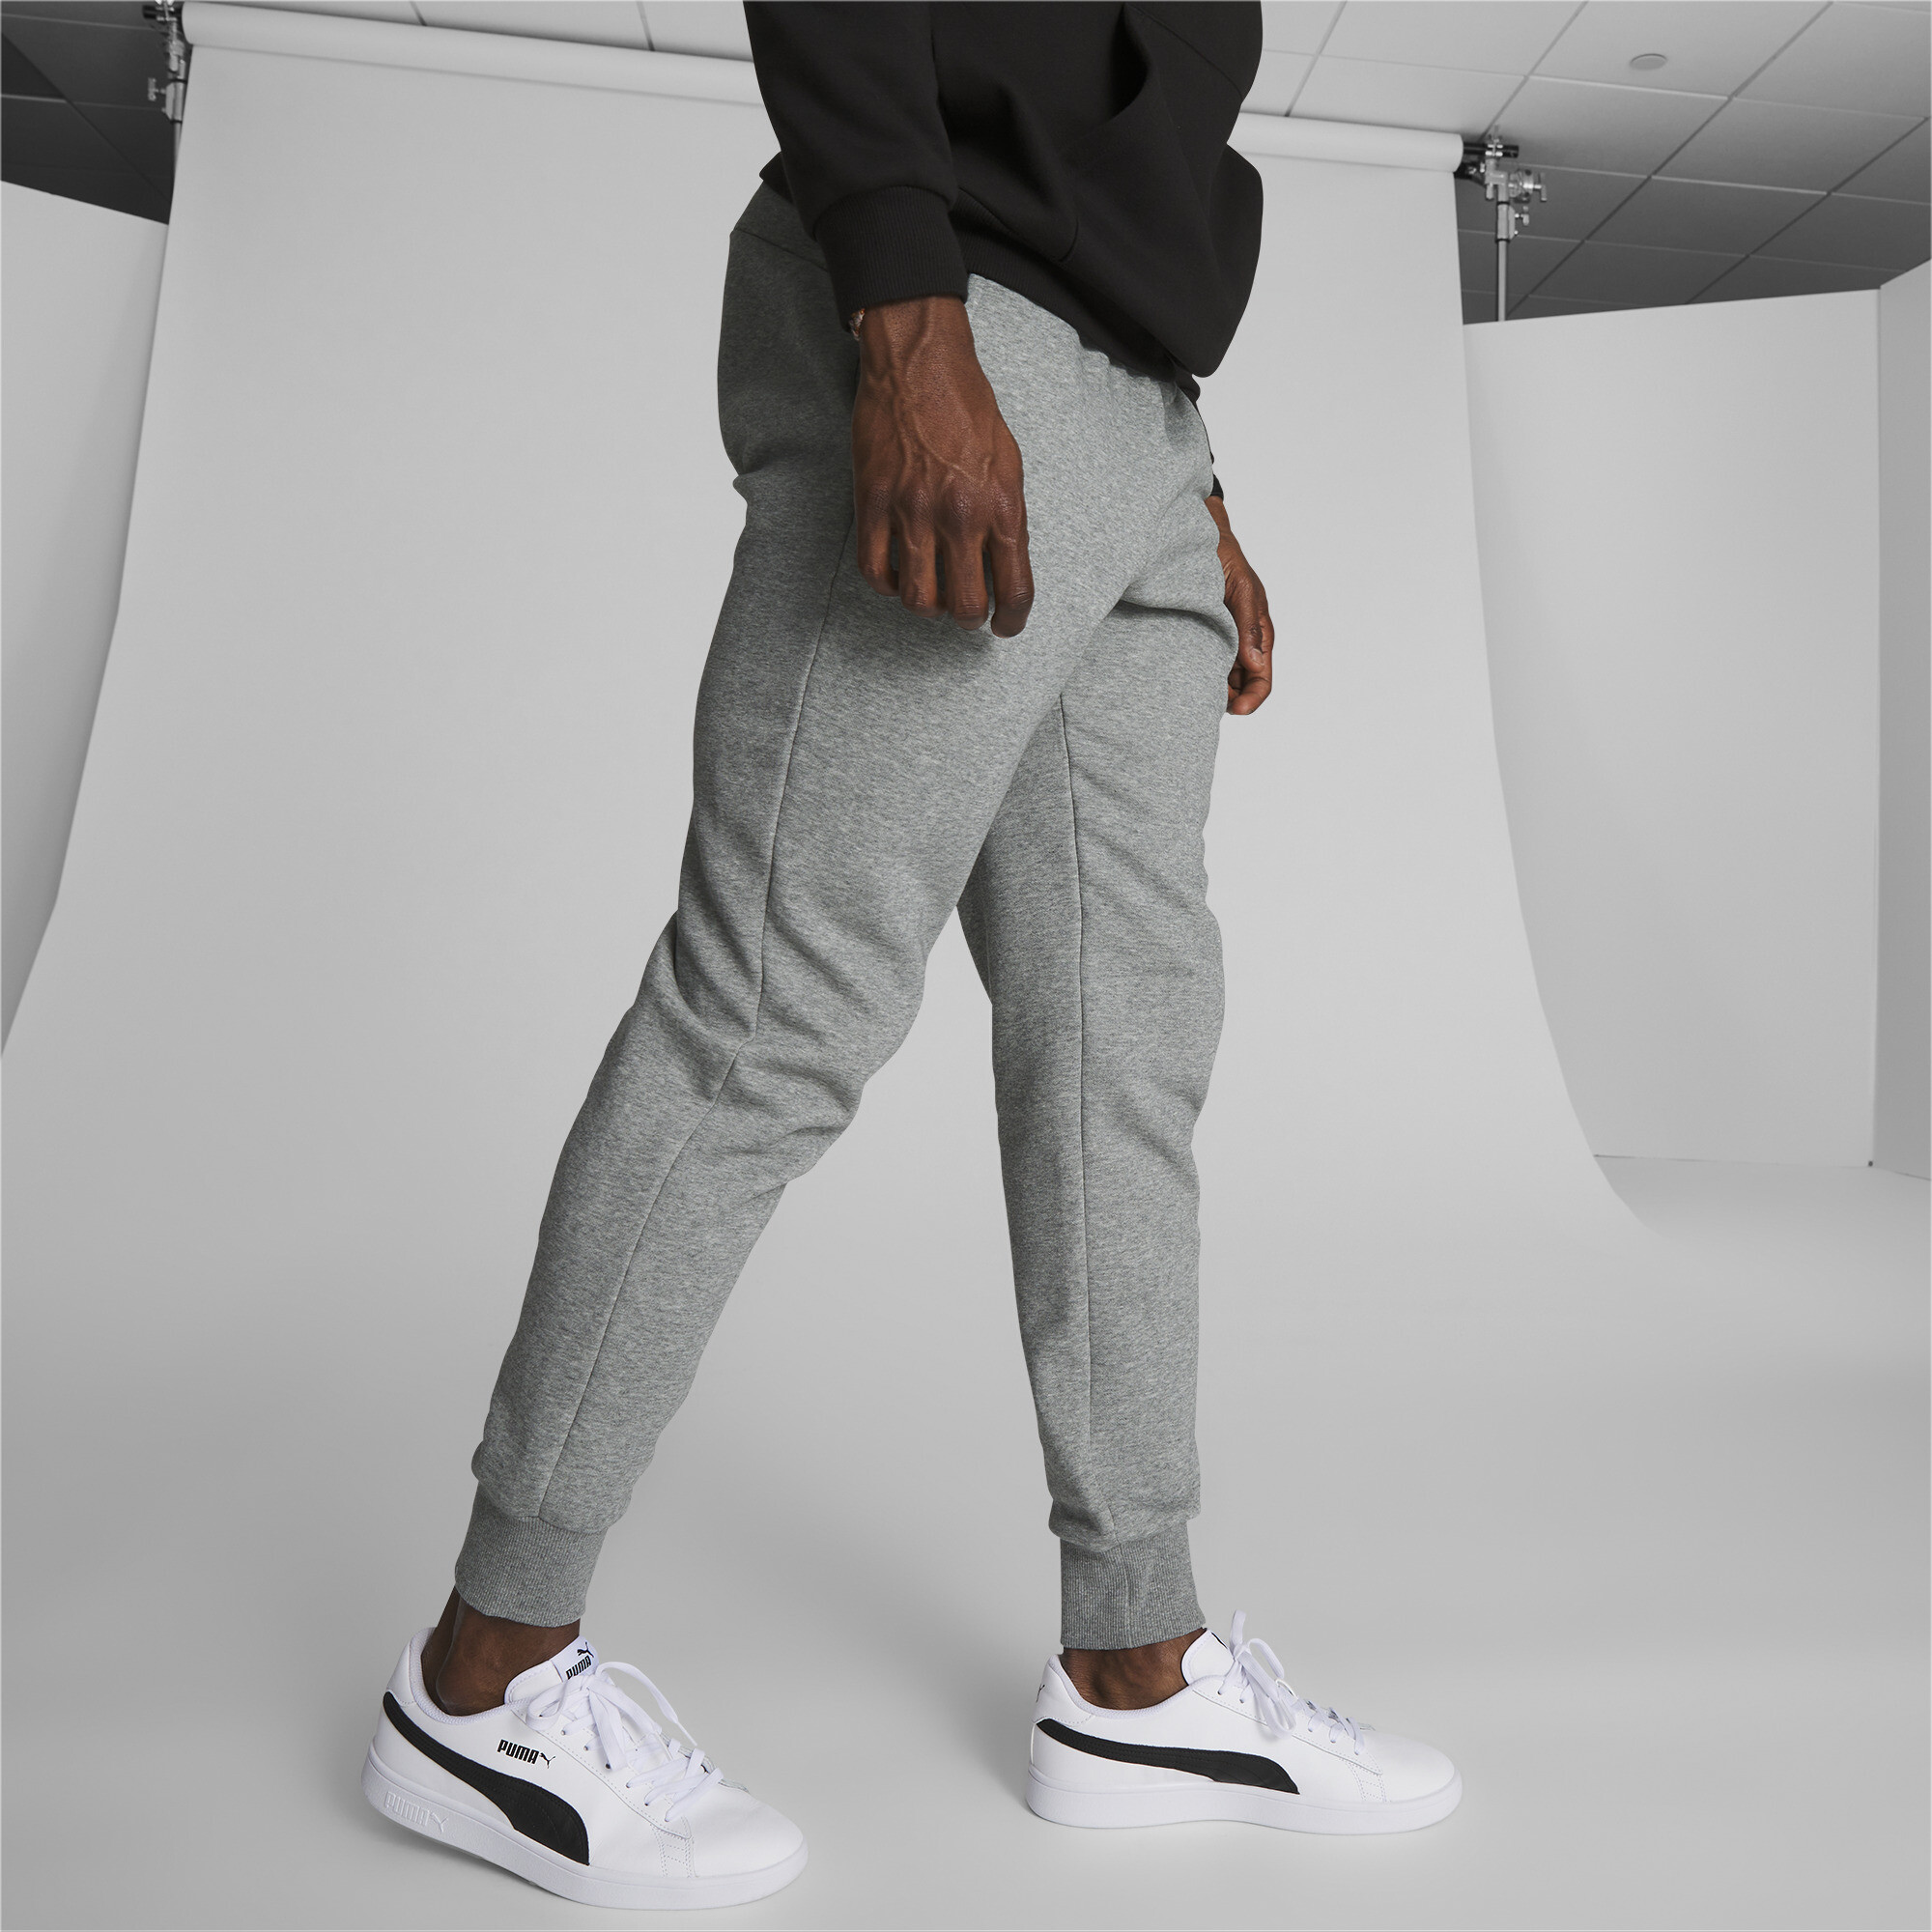 PUMA Essentials Men's Sweatpants - Medium Gray Heather, Size L for sale ...